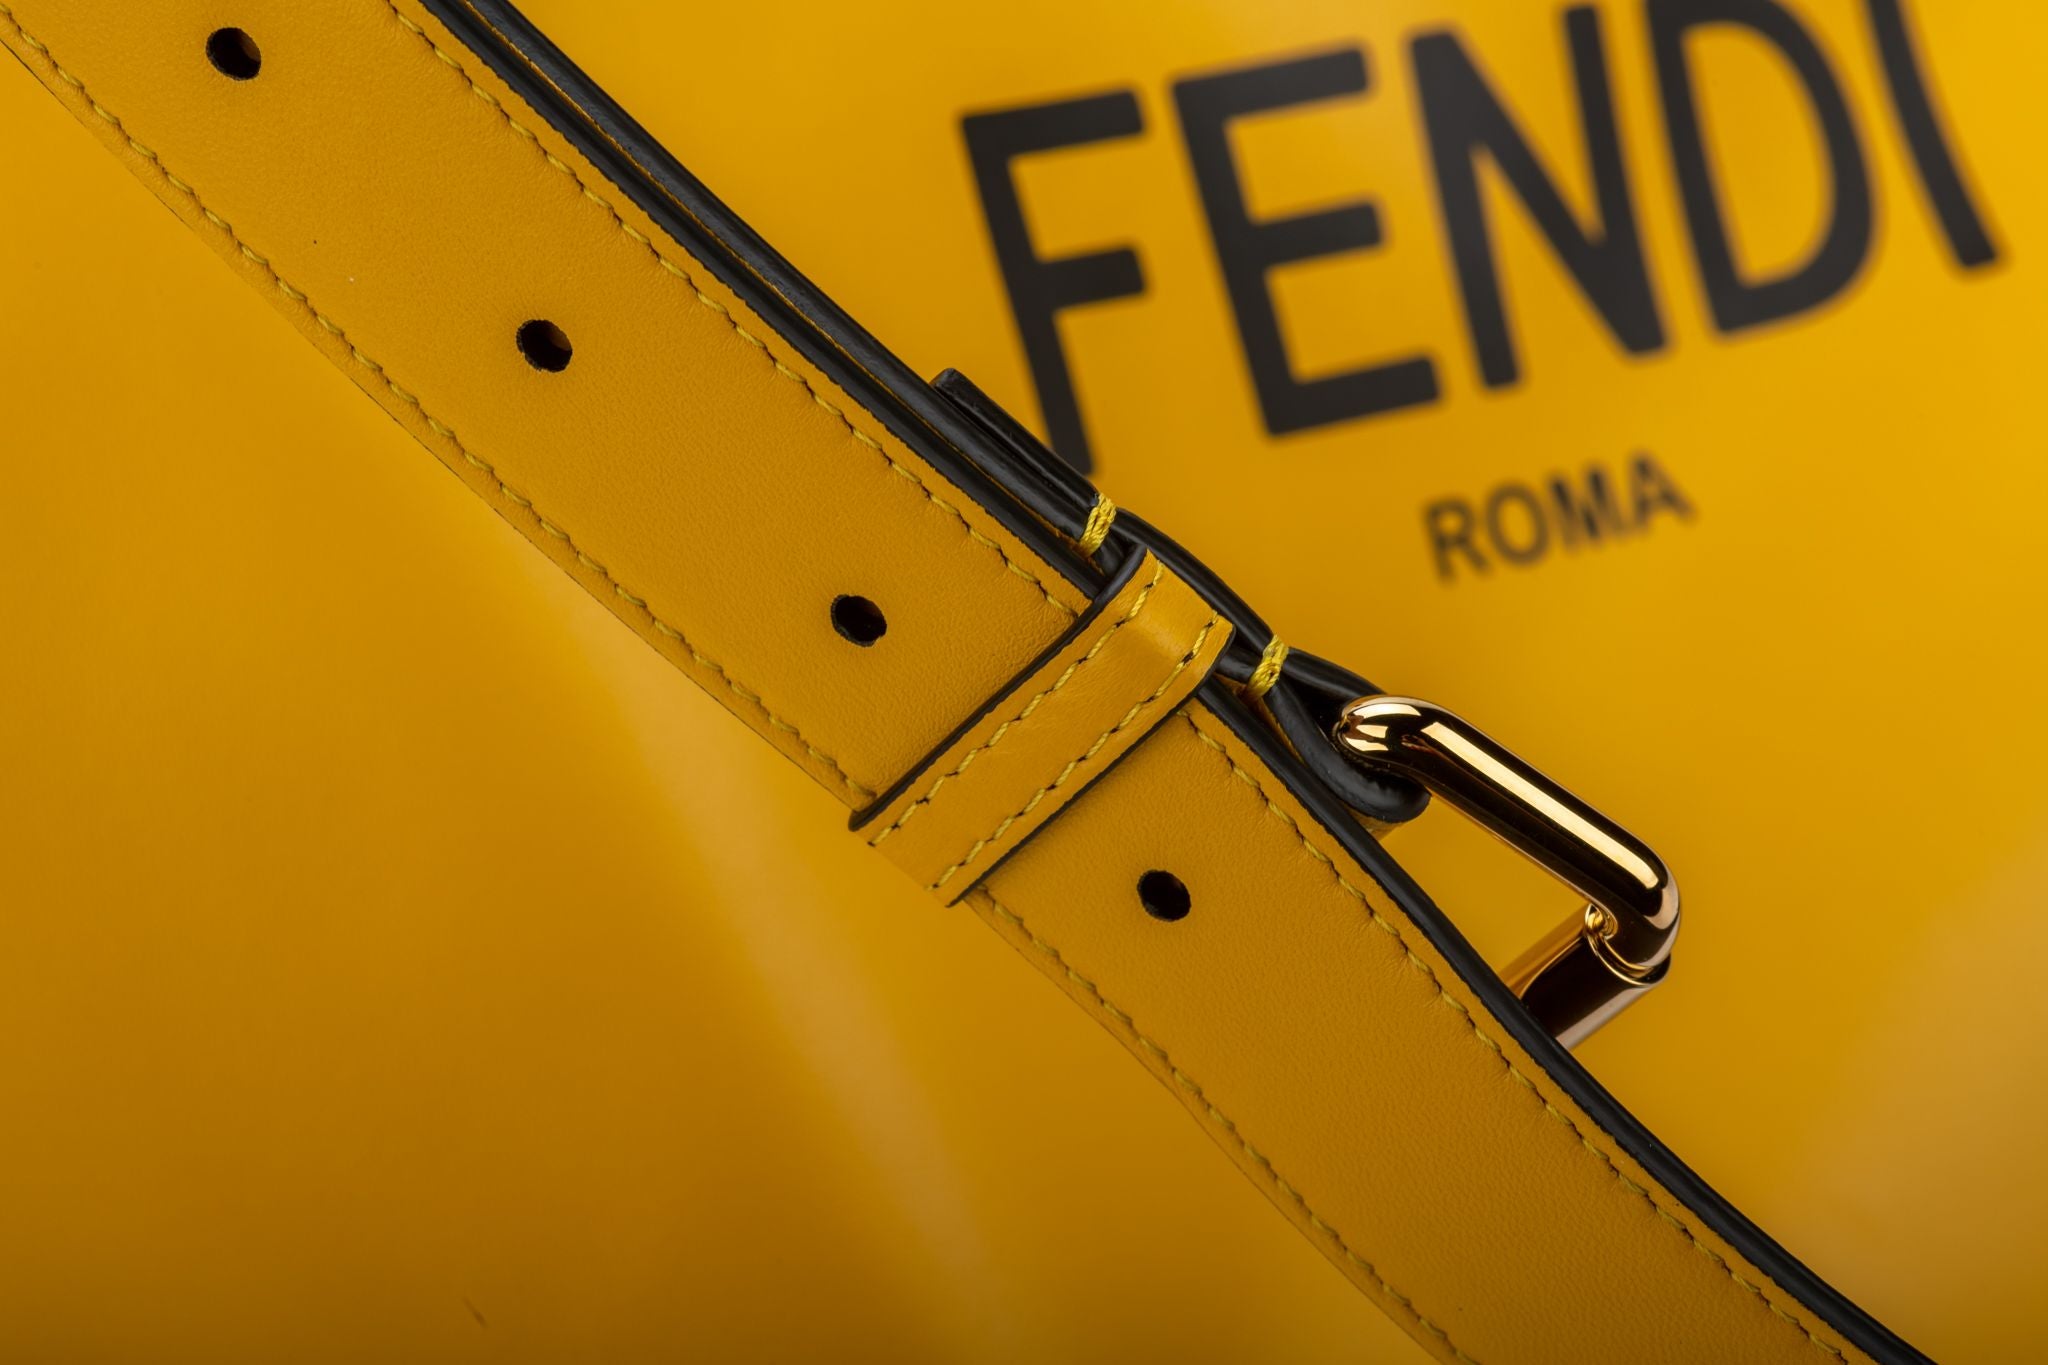 Fendi New Large Yellow Cross Body Bag - Vintage Lux